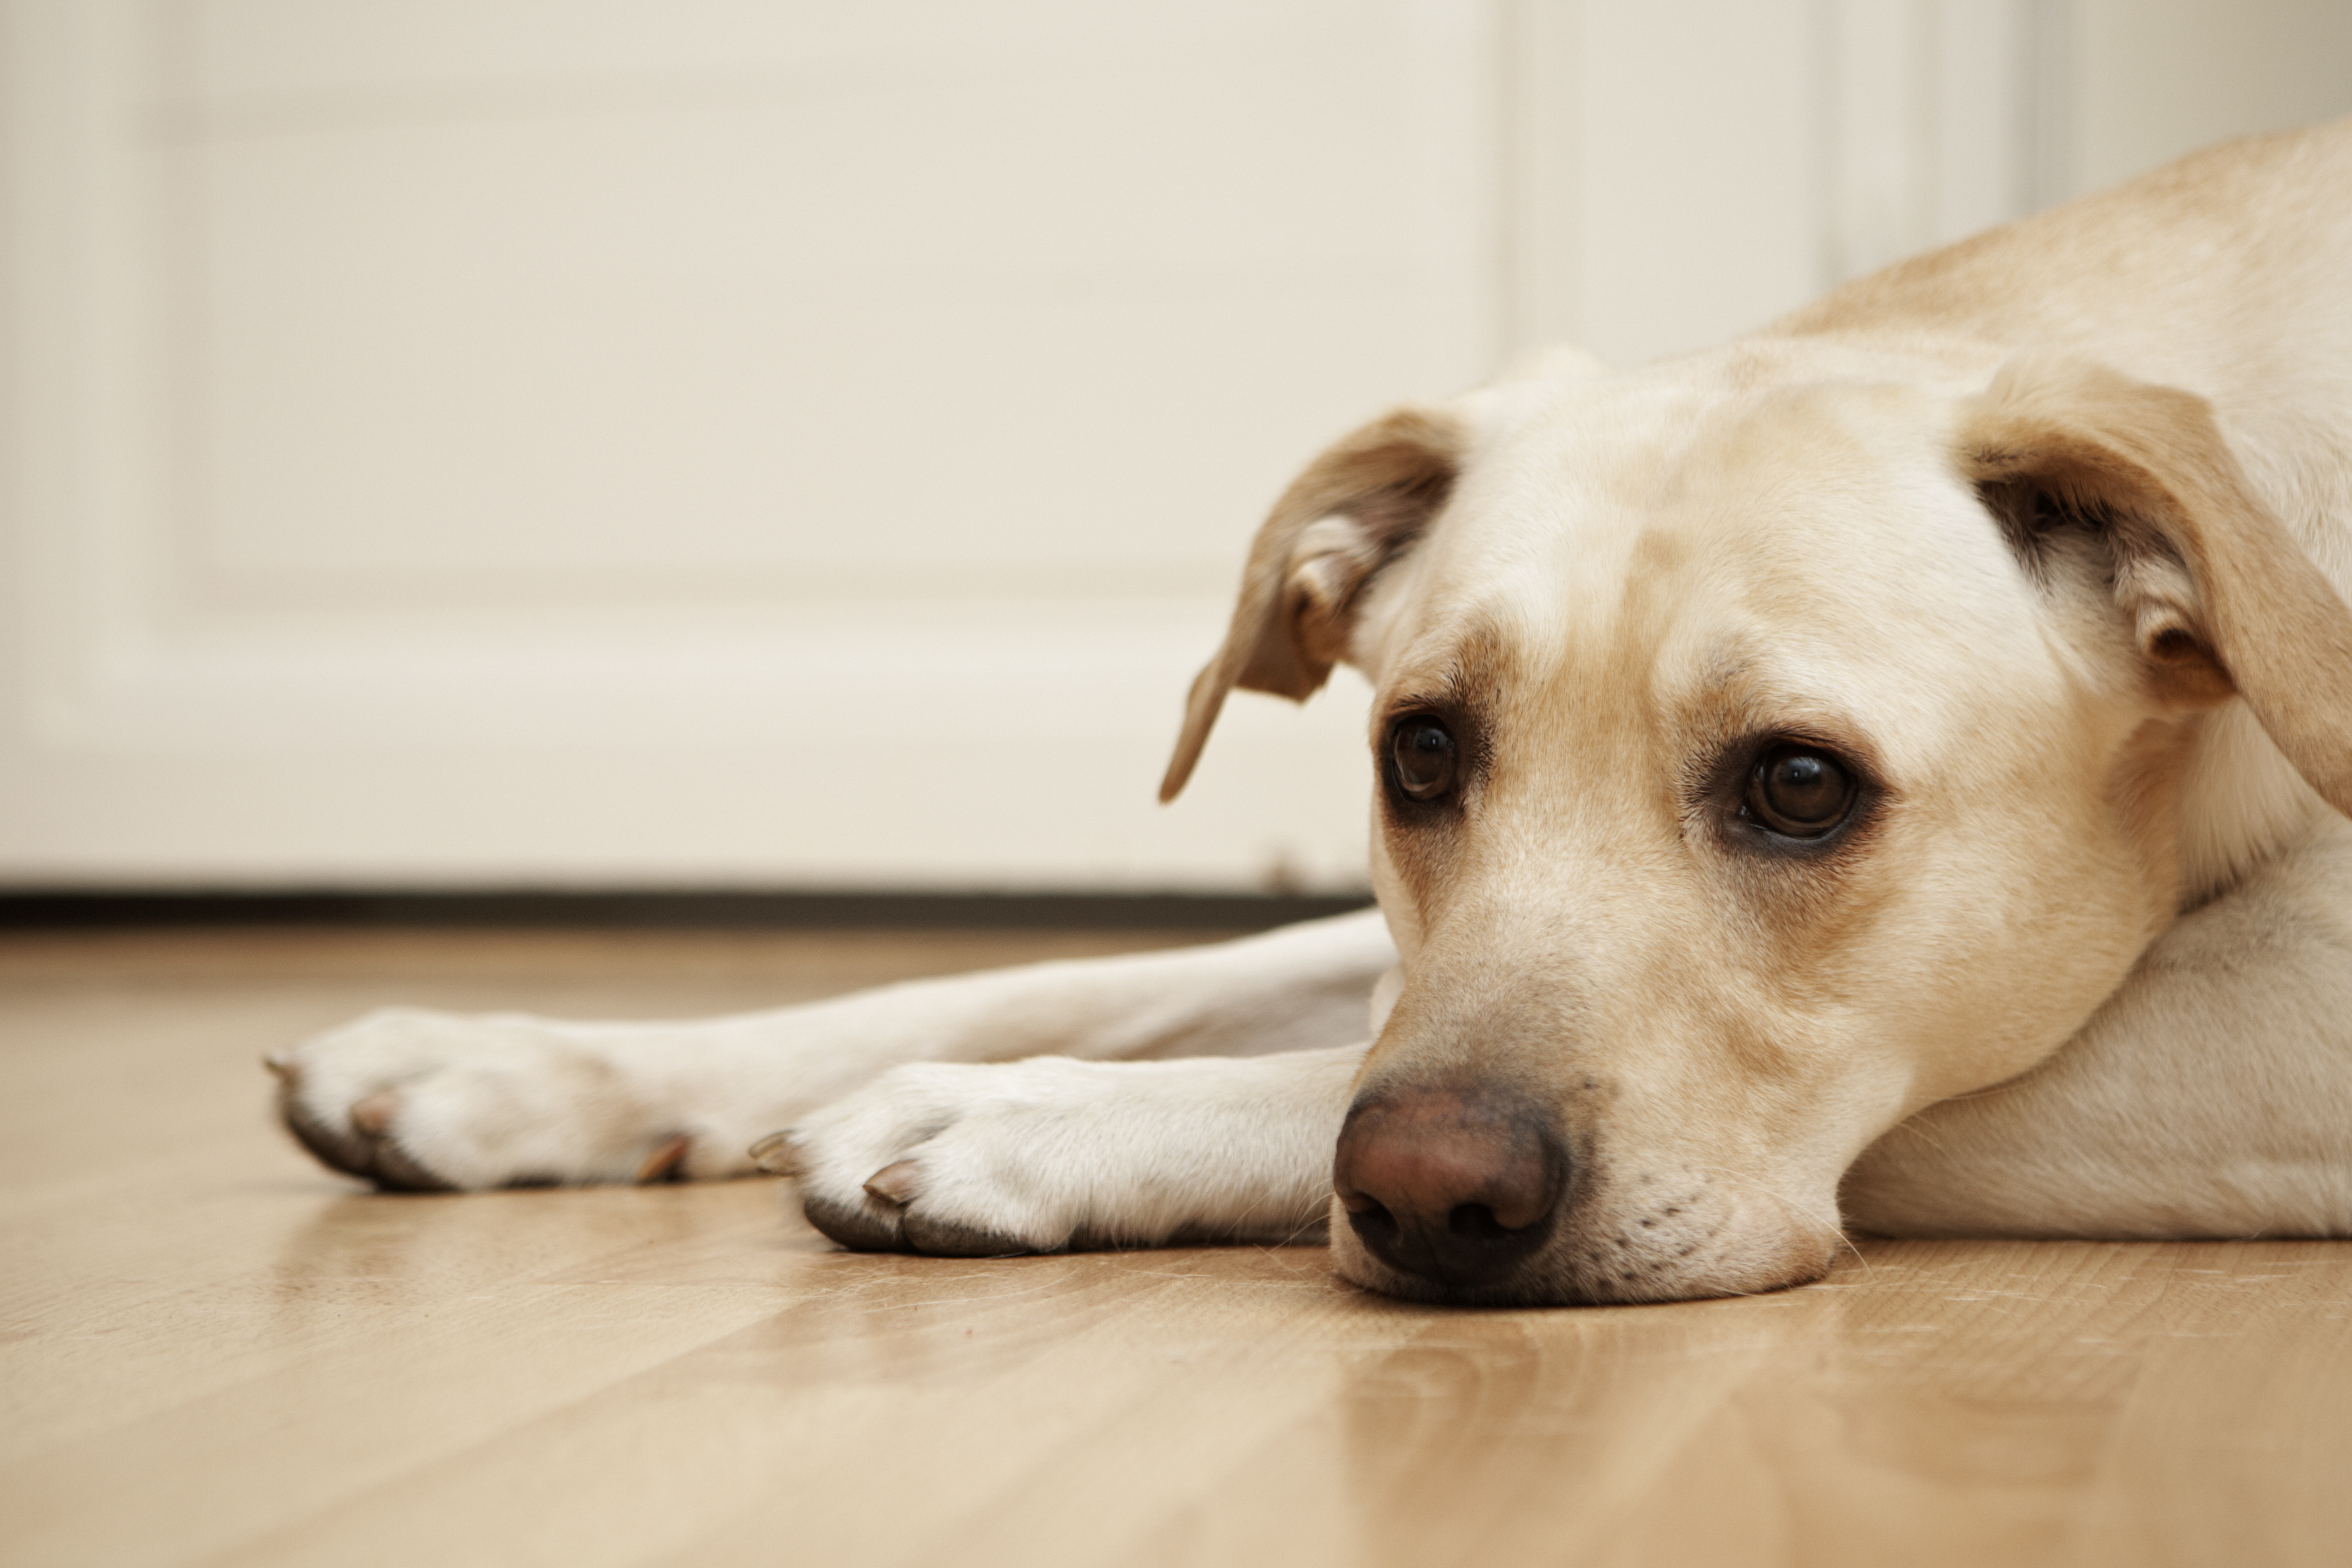 Is wooden flooring pet friendly?